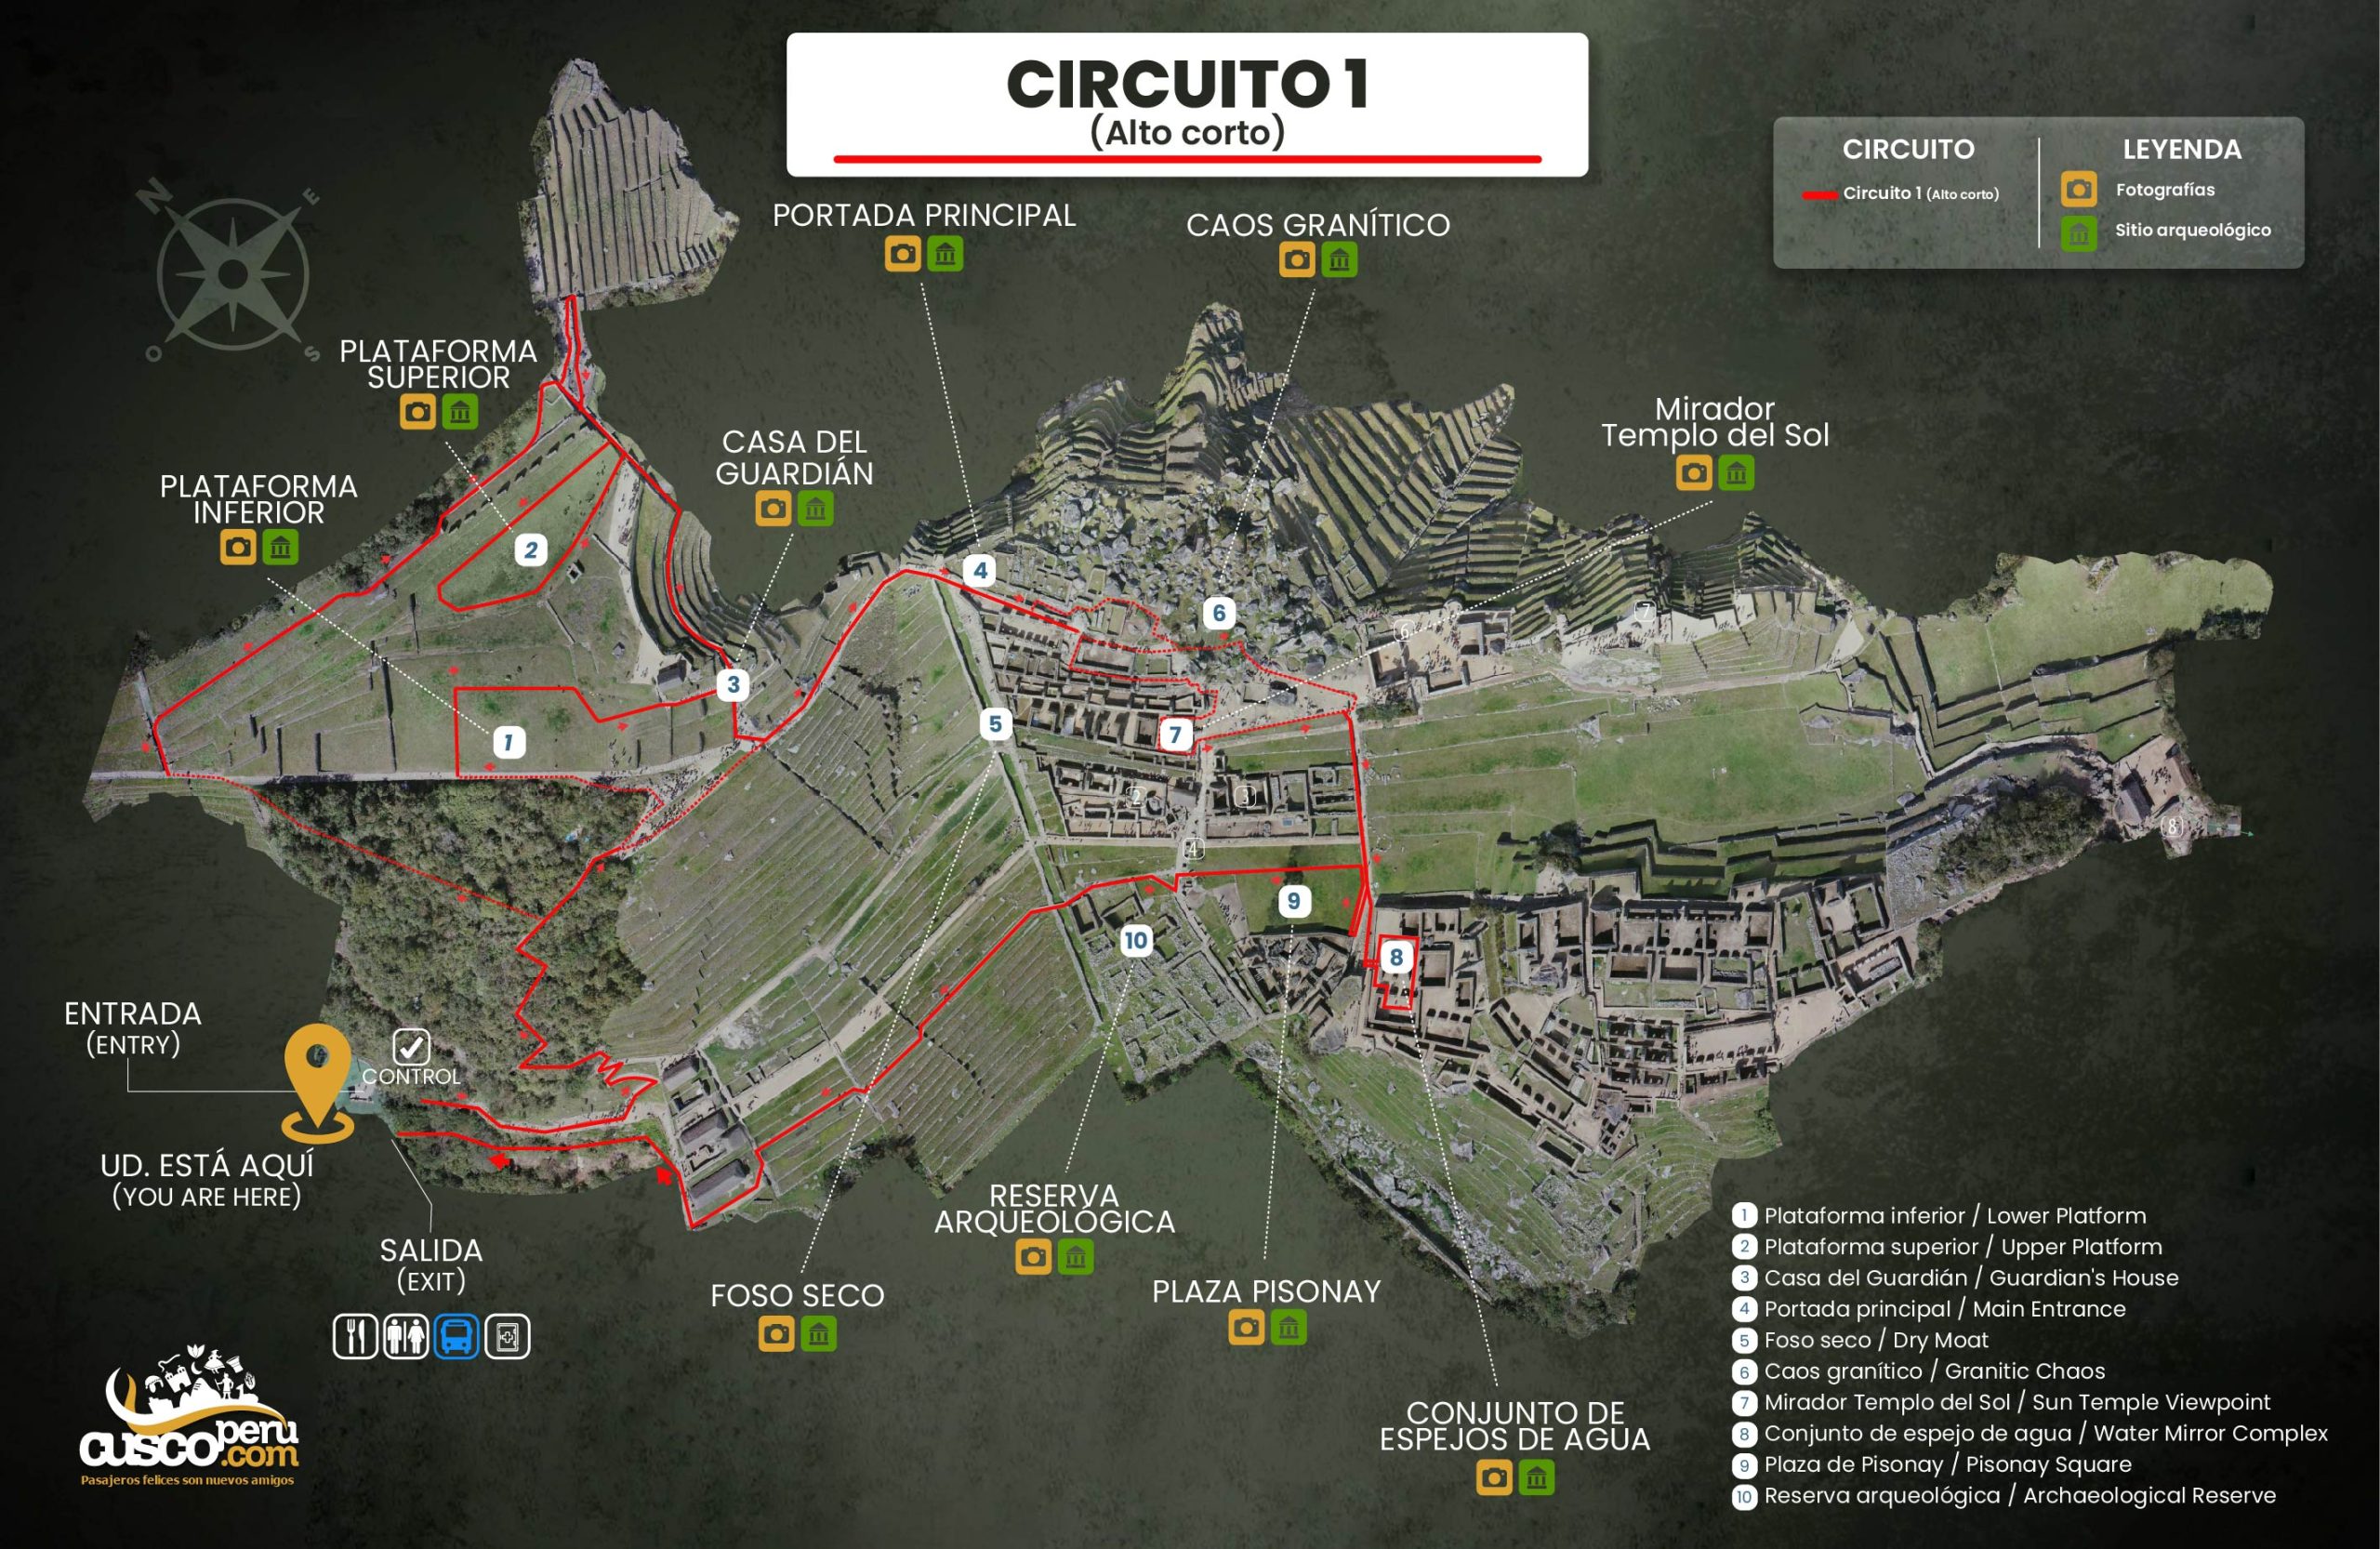 Mapa do circuito 1 em Machu Picchu. Fonte: CuscoPeru.com